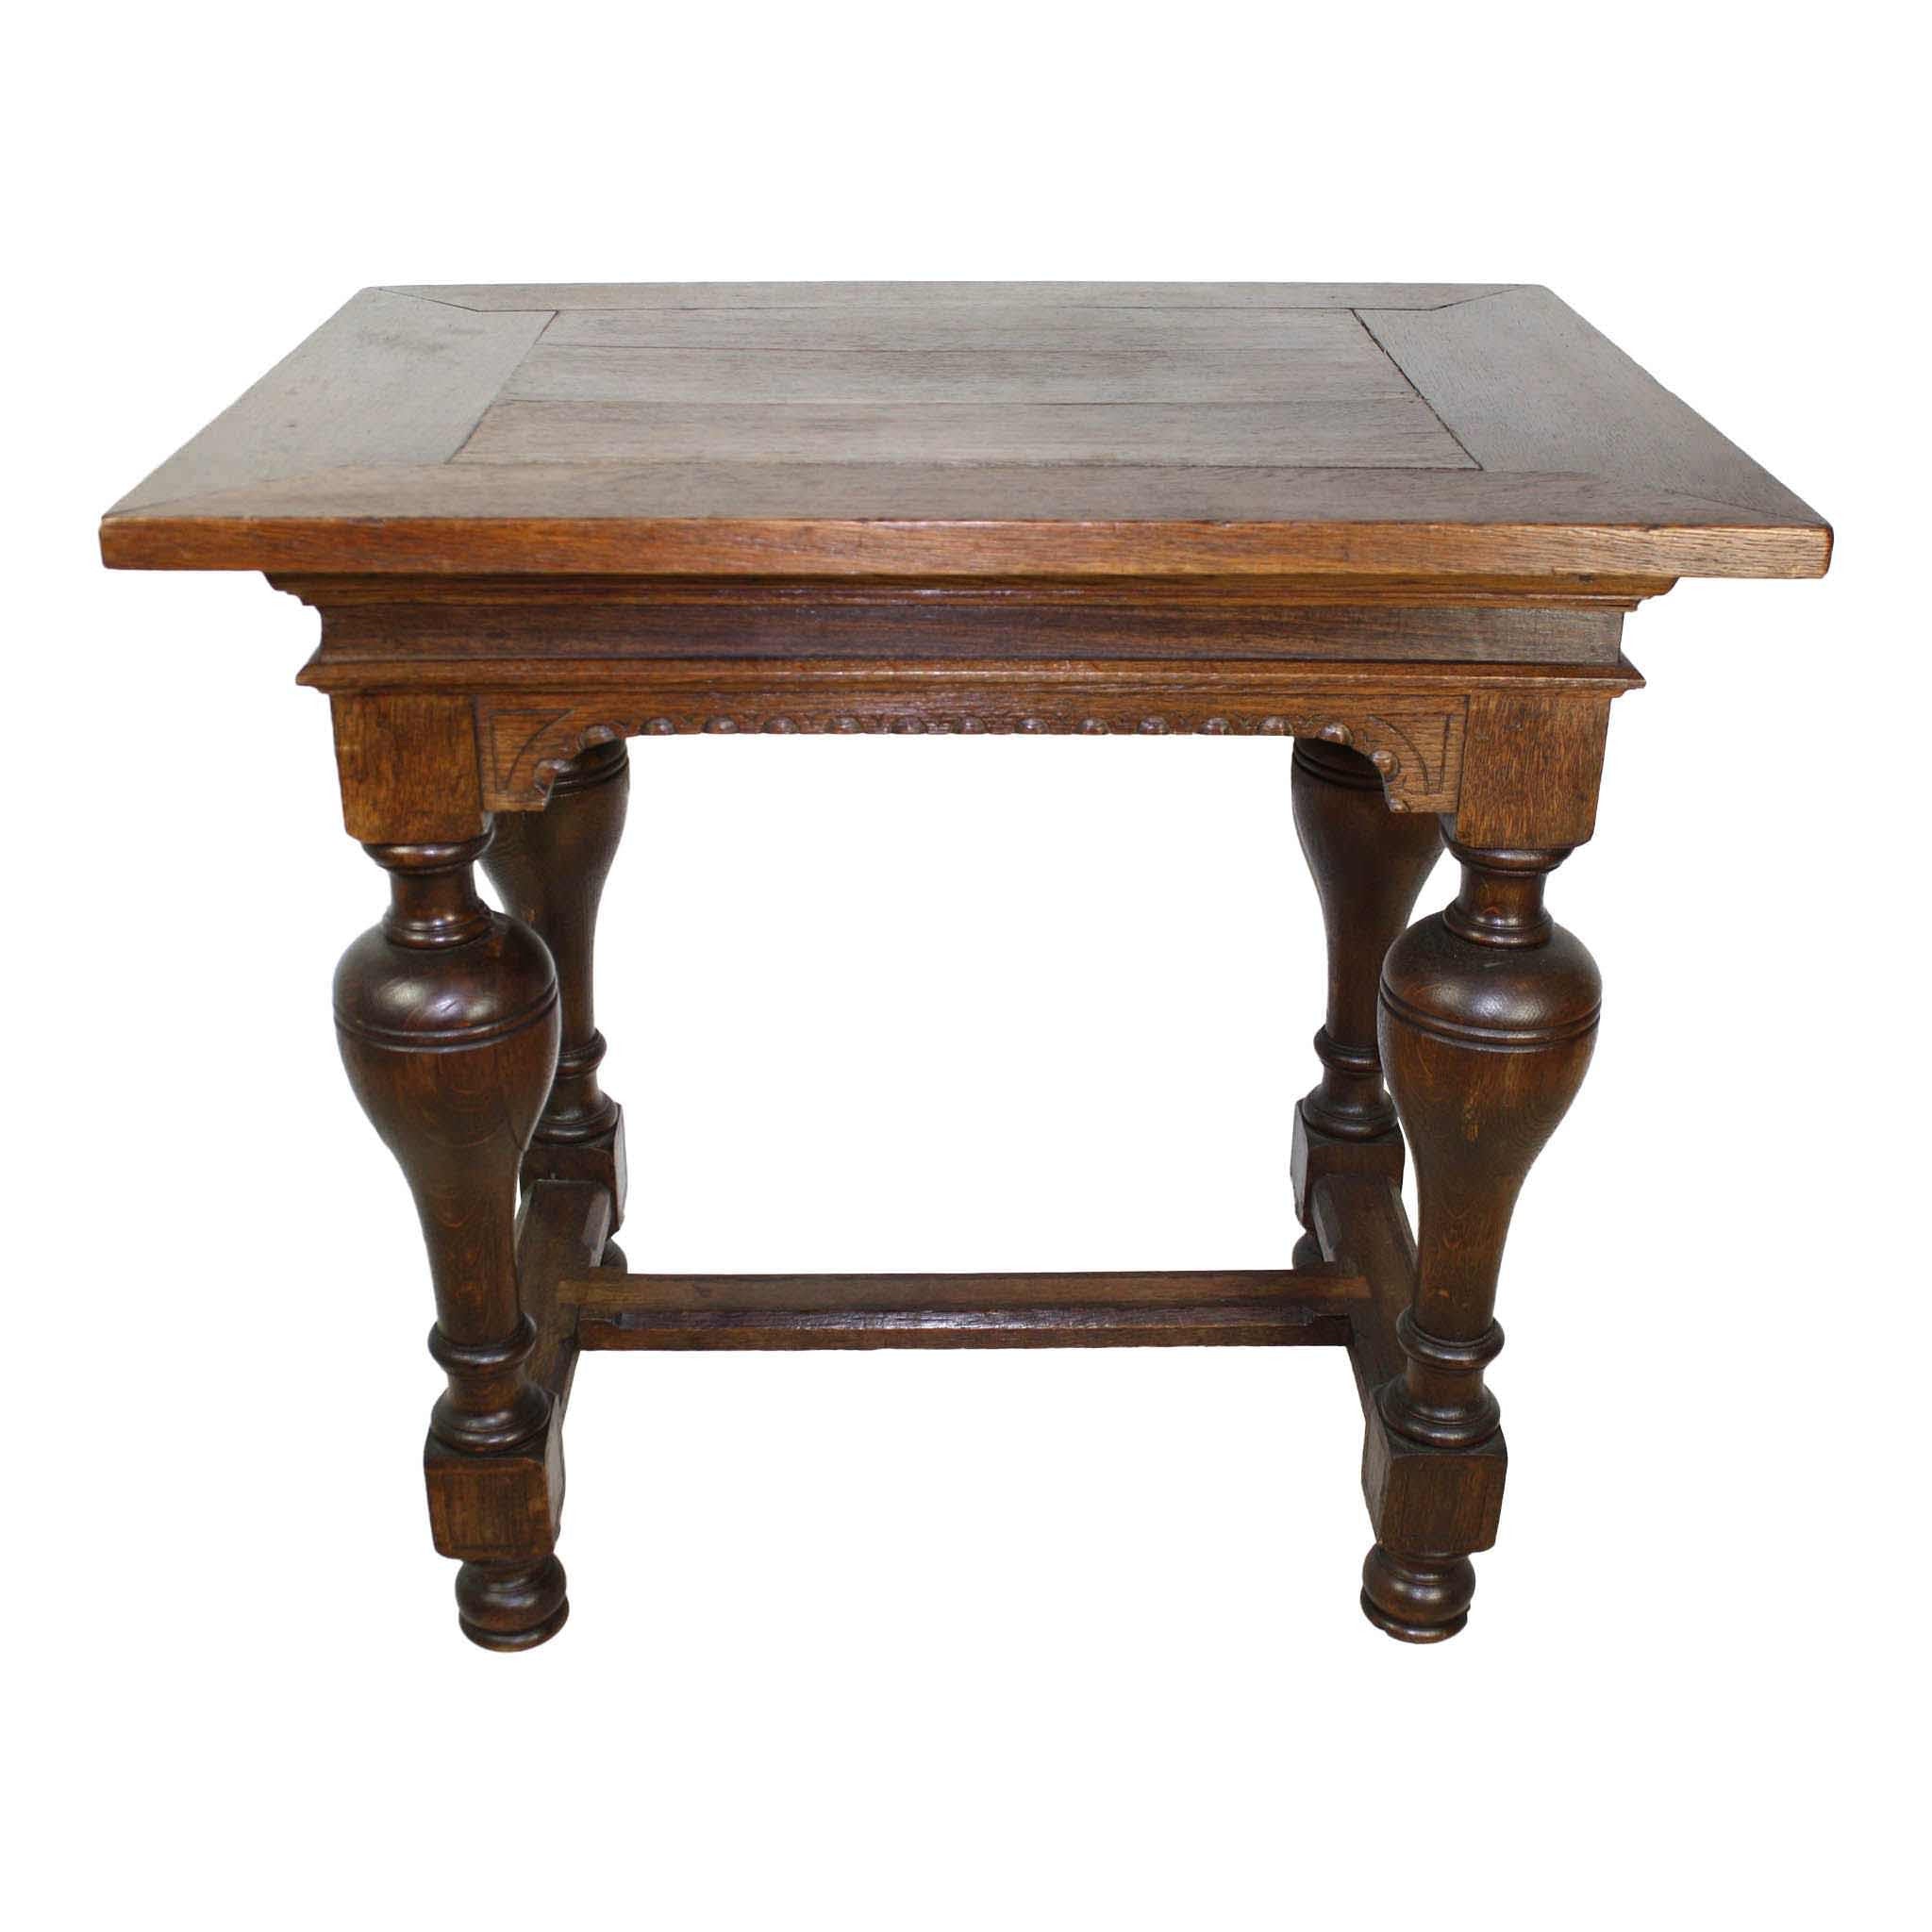 Rectangular Dutch Table